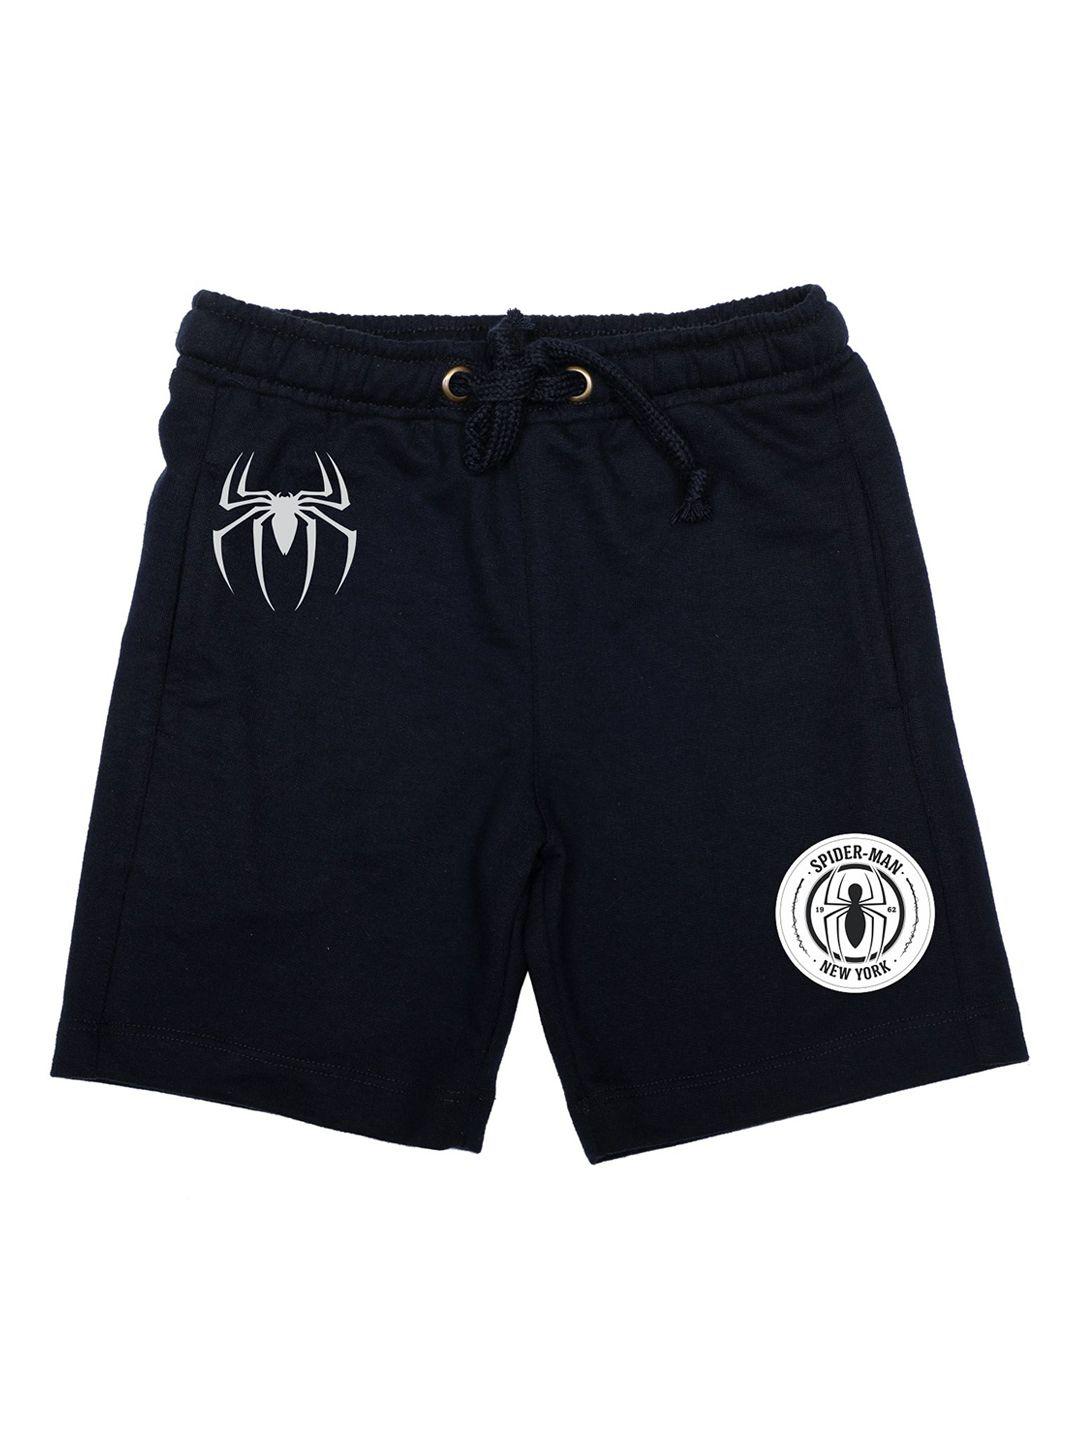 marvel by wear your mind boys navy blue spiderman printed regular fit regular shorts